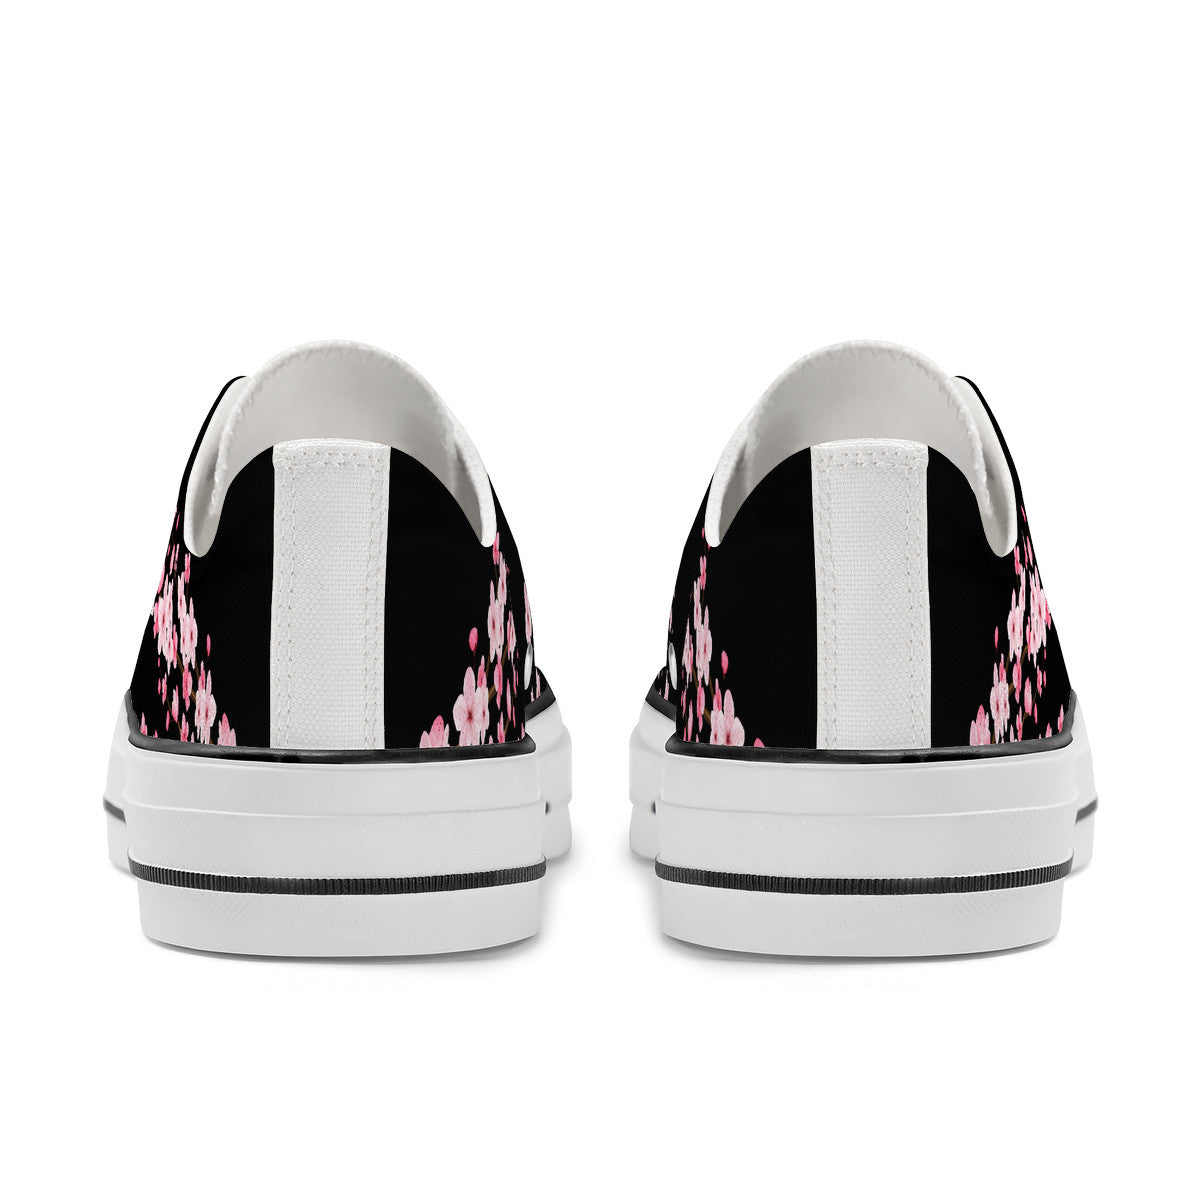 B&W Sakura Low Top Canvas Converse Style Shoes